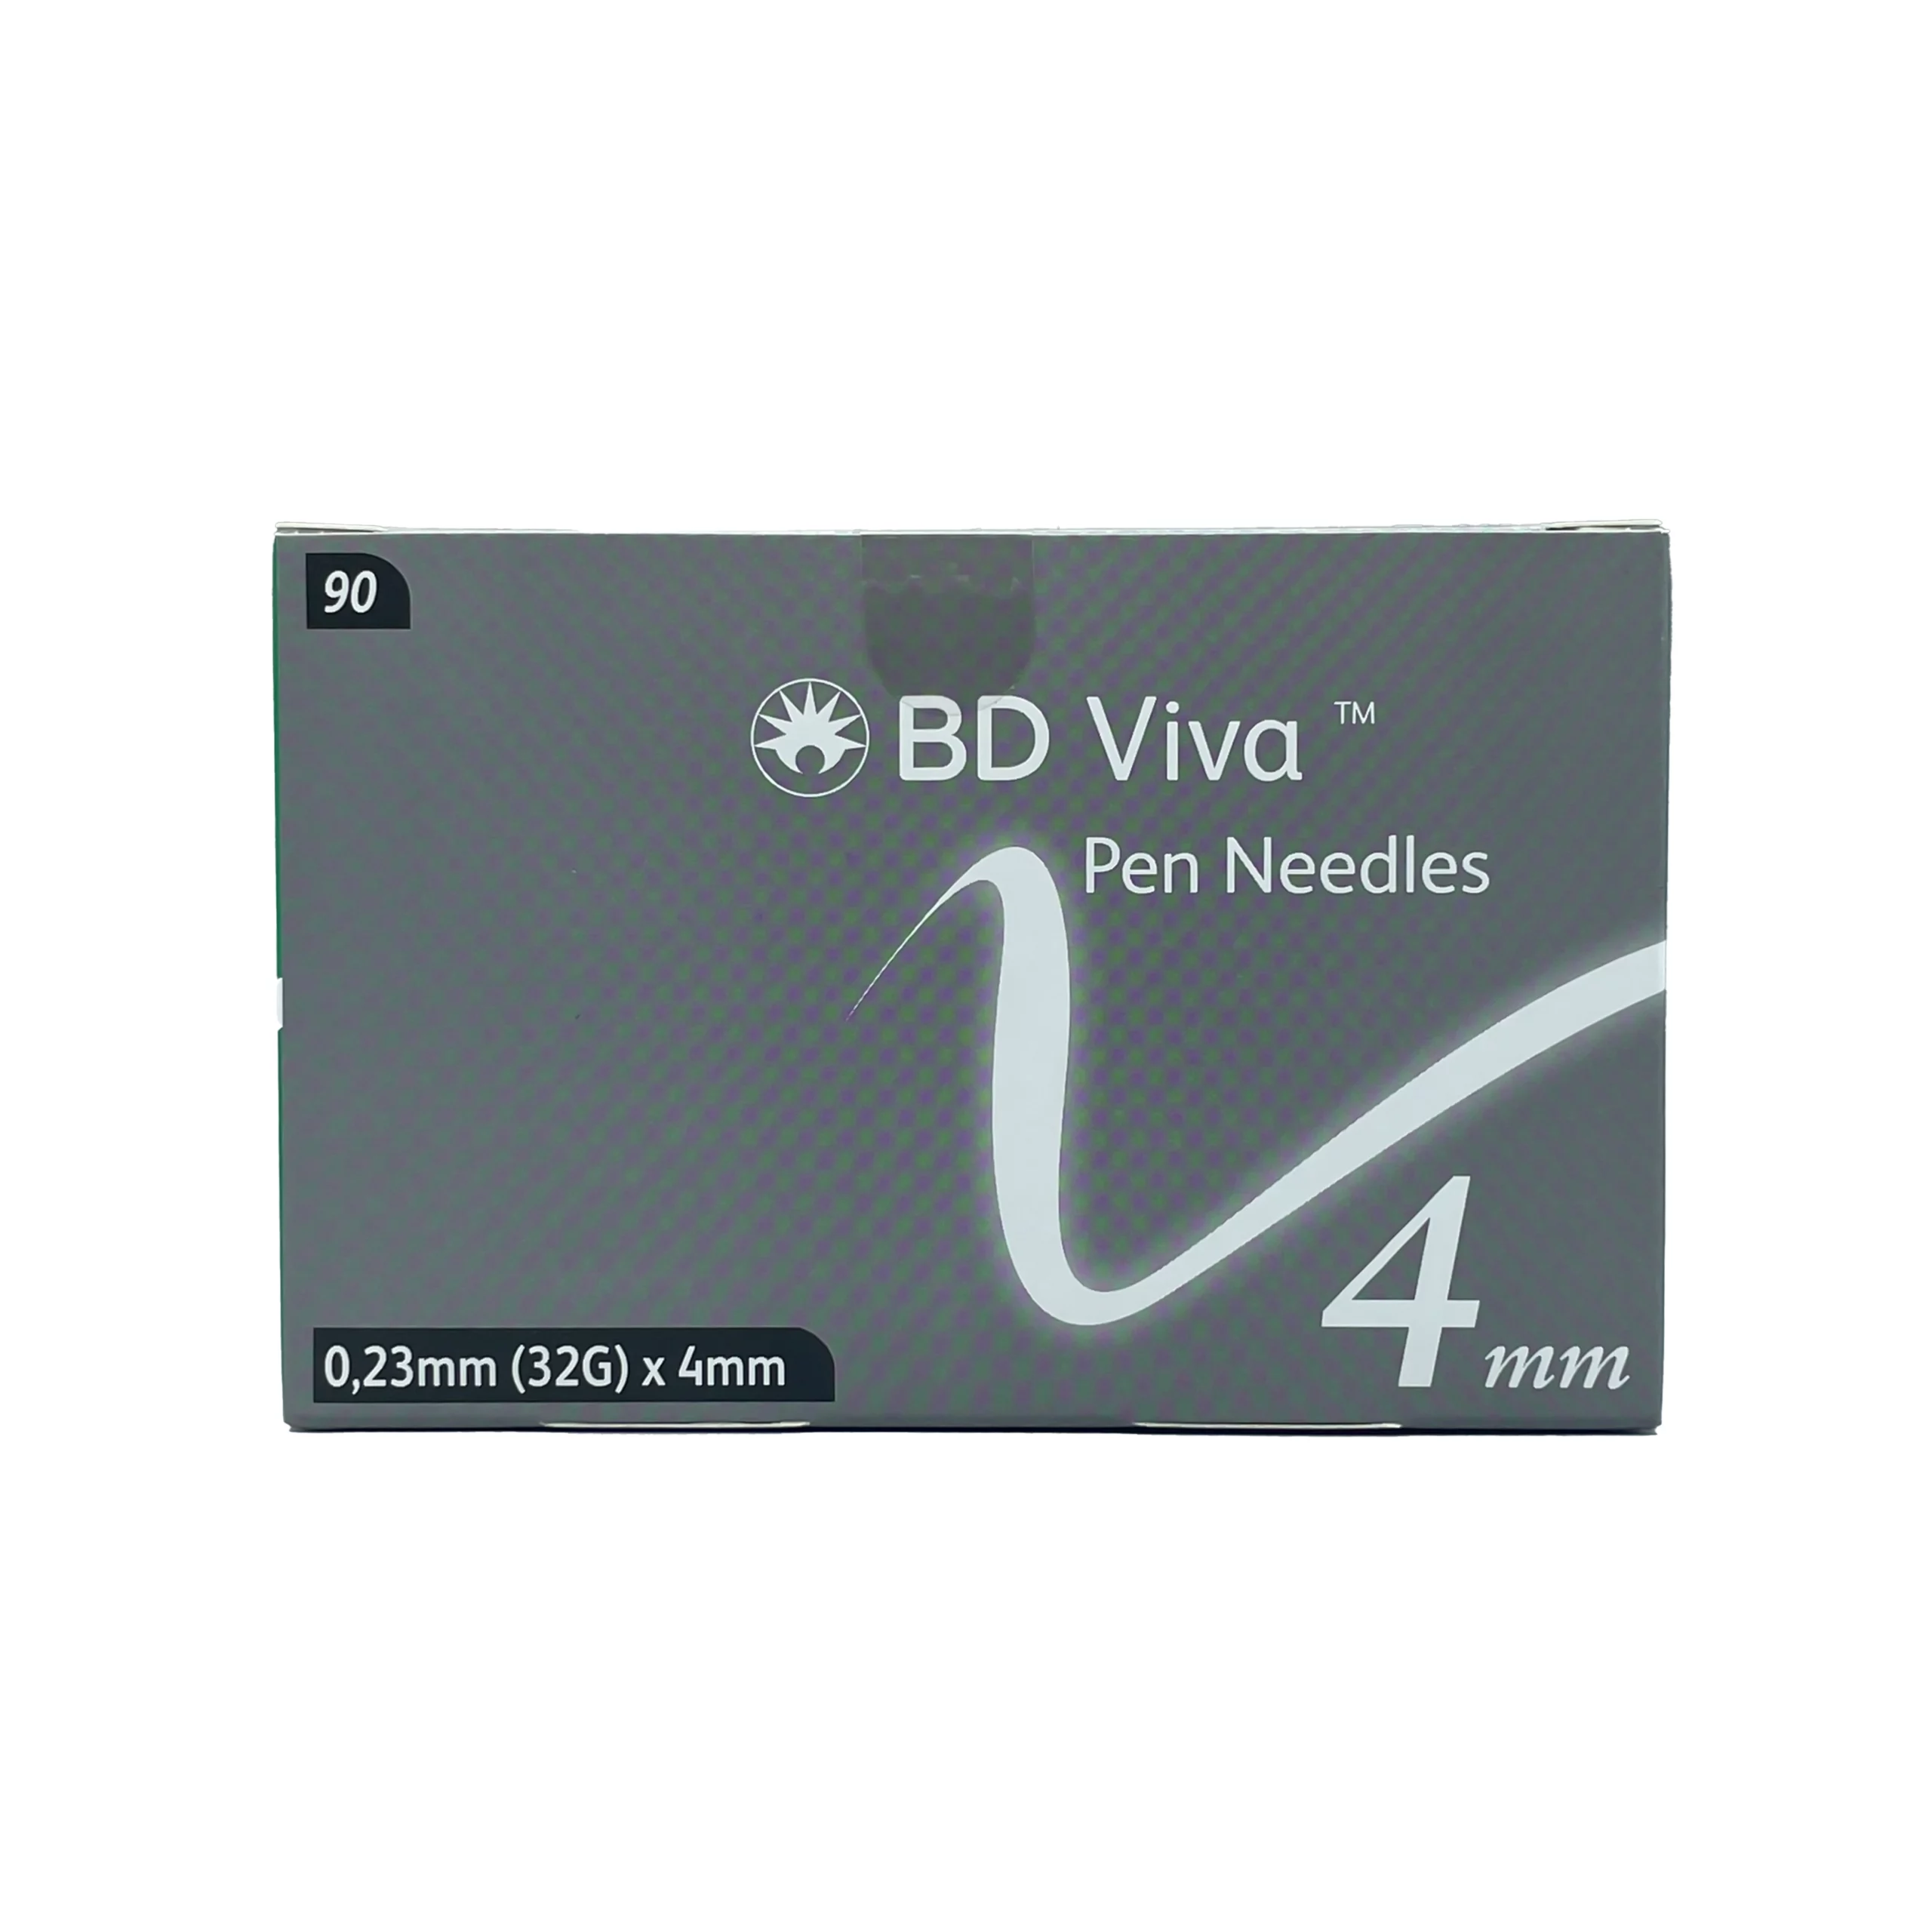 BD Viva 4mm Pen Needles (75)